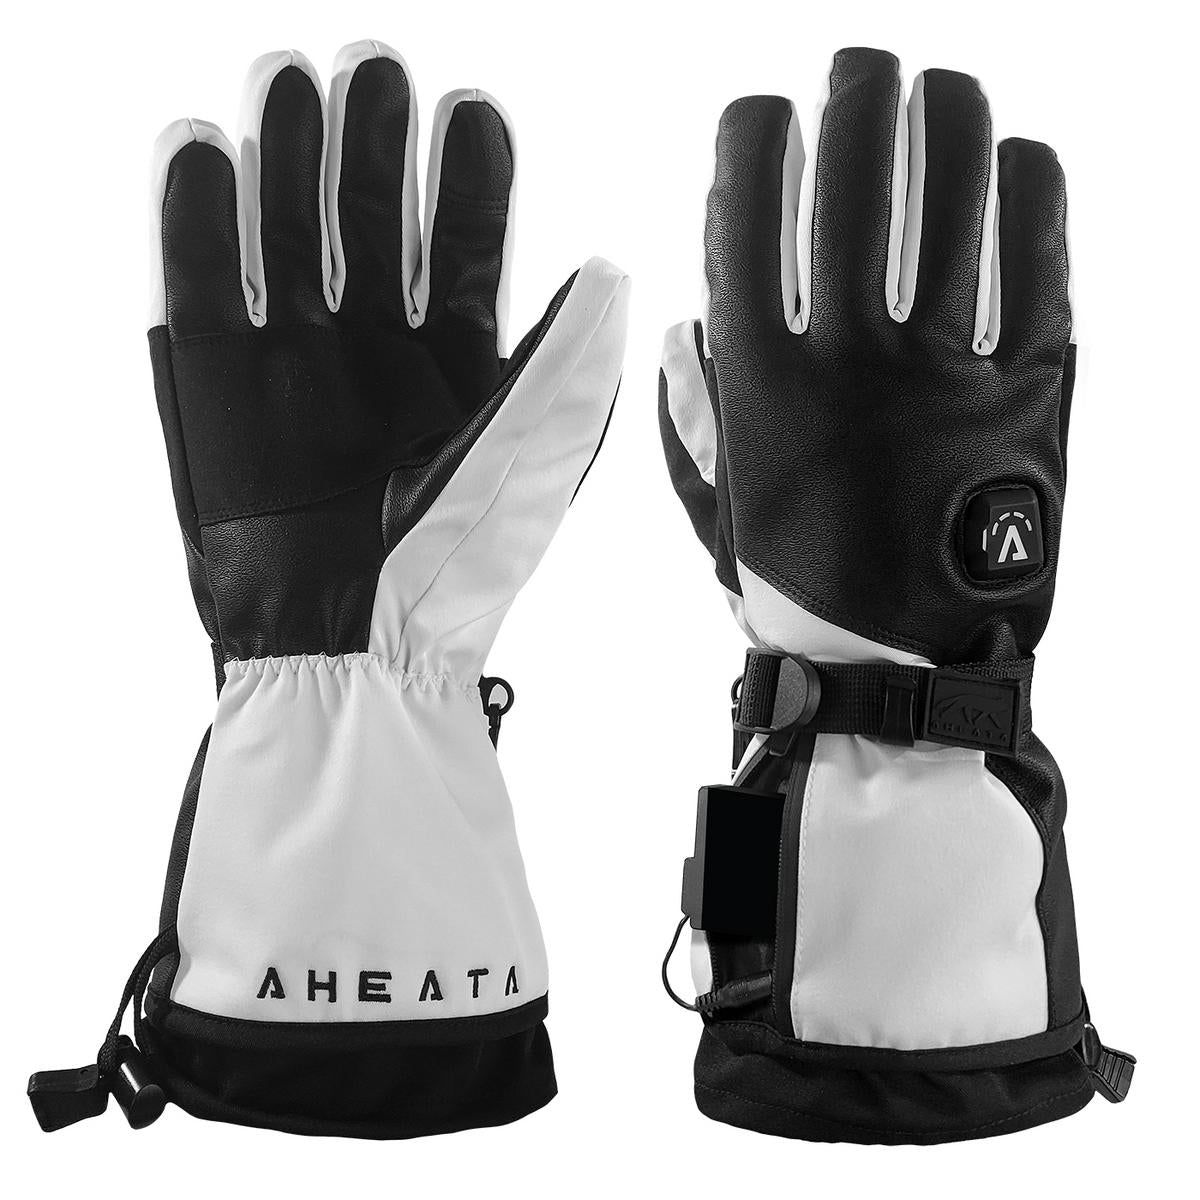 Aheata 7V Battery Heated Gloves - Unisex - Heated